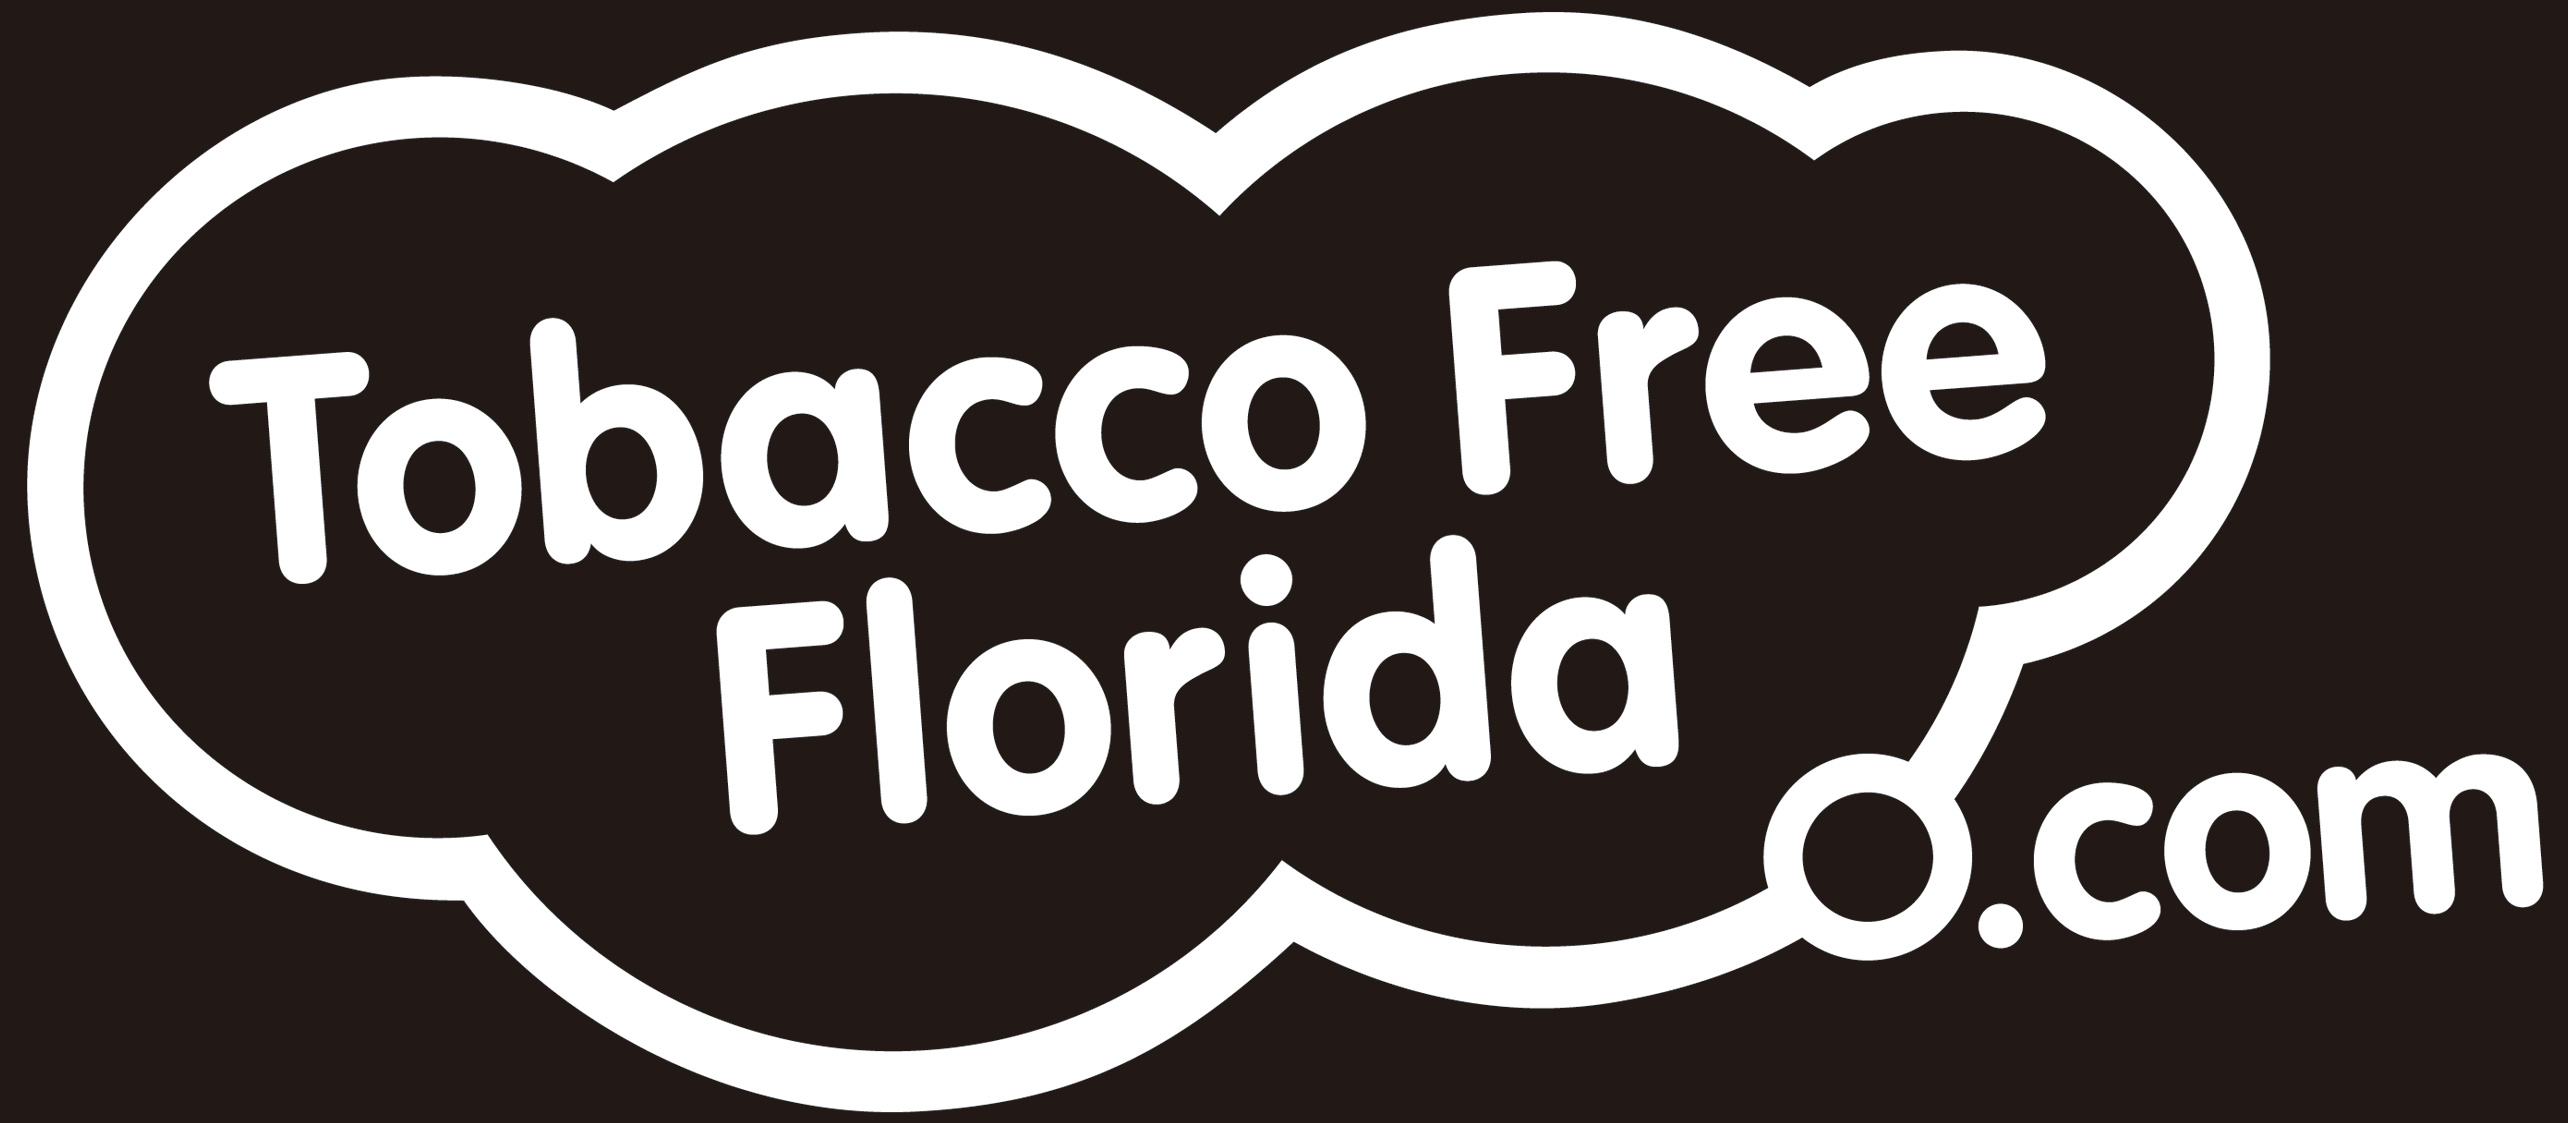 Tobacco Free Florida Logo photo - 1